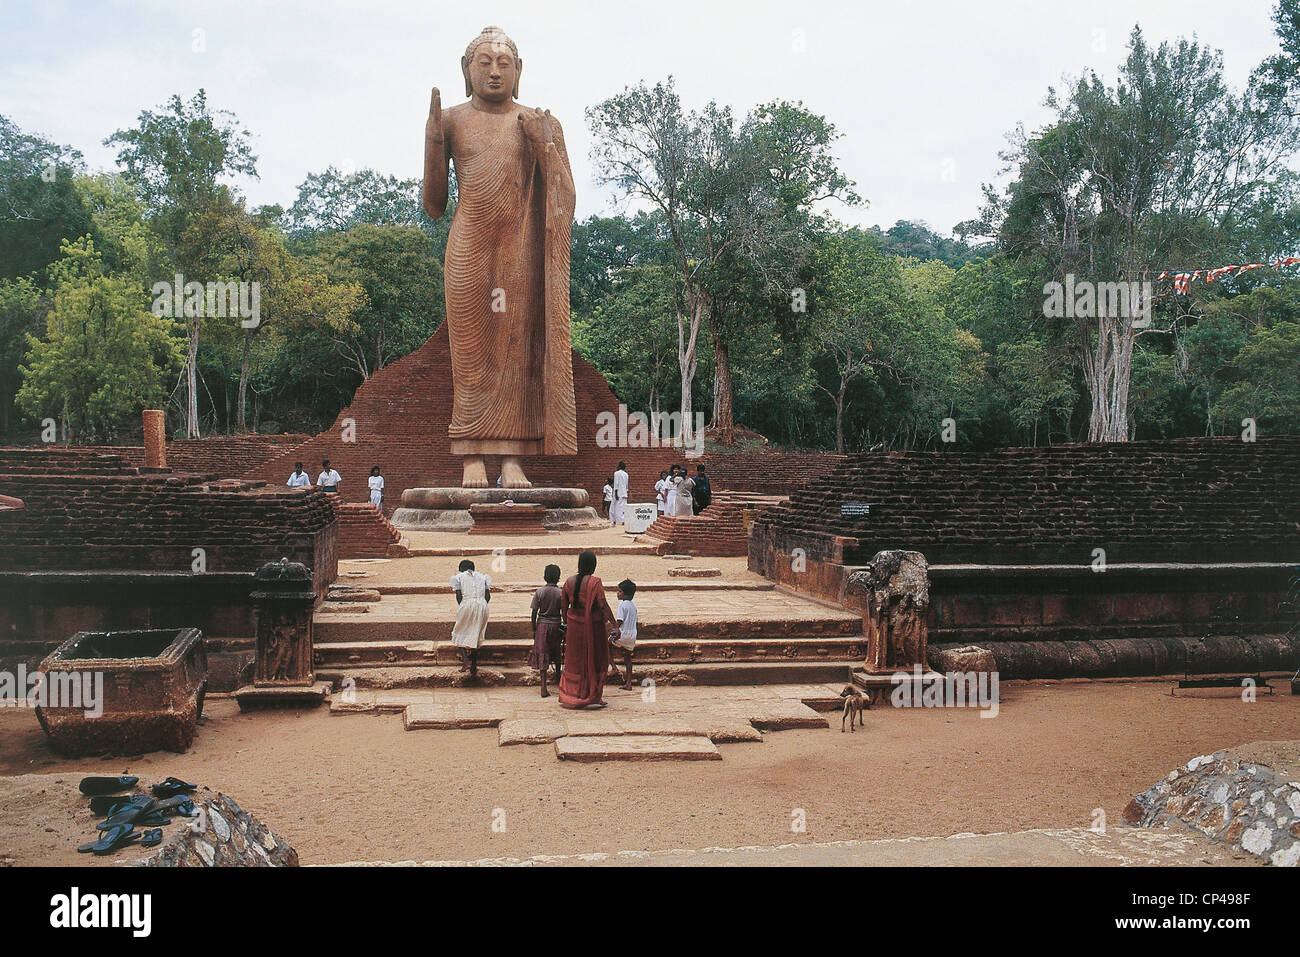 Sri Lanka (Ceylon) - Maligawila Vihara, the colossal statue of Buddha made of limestone. Stock Photo